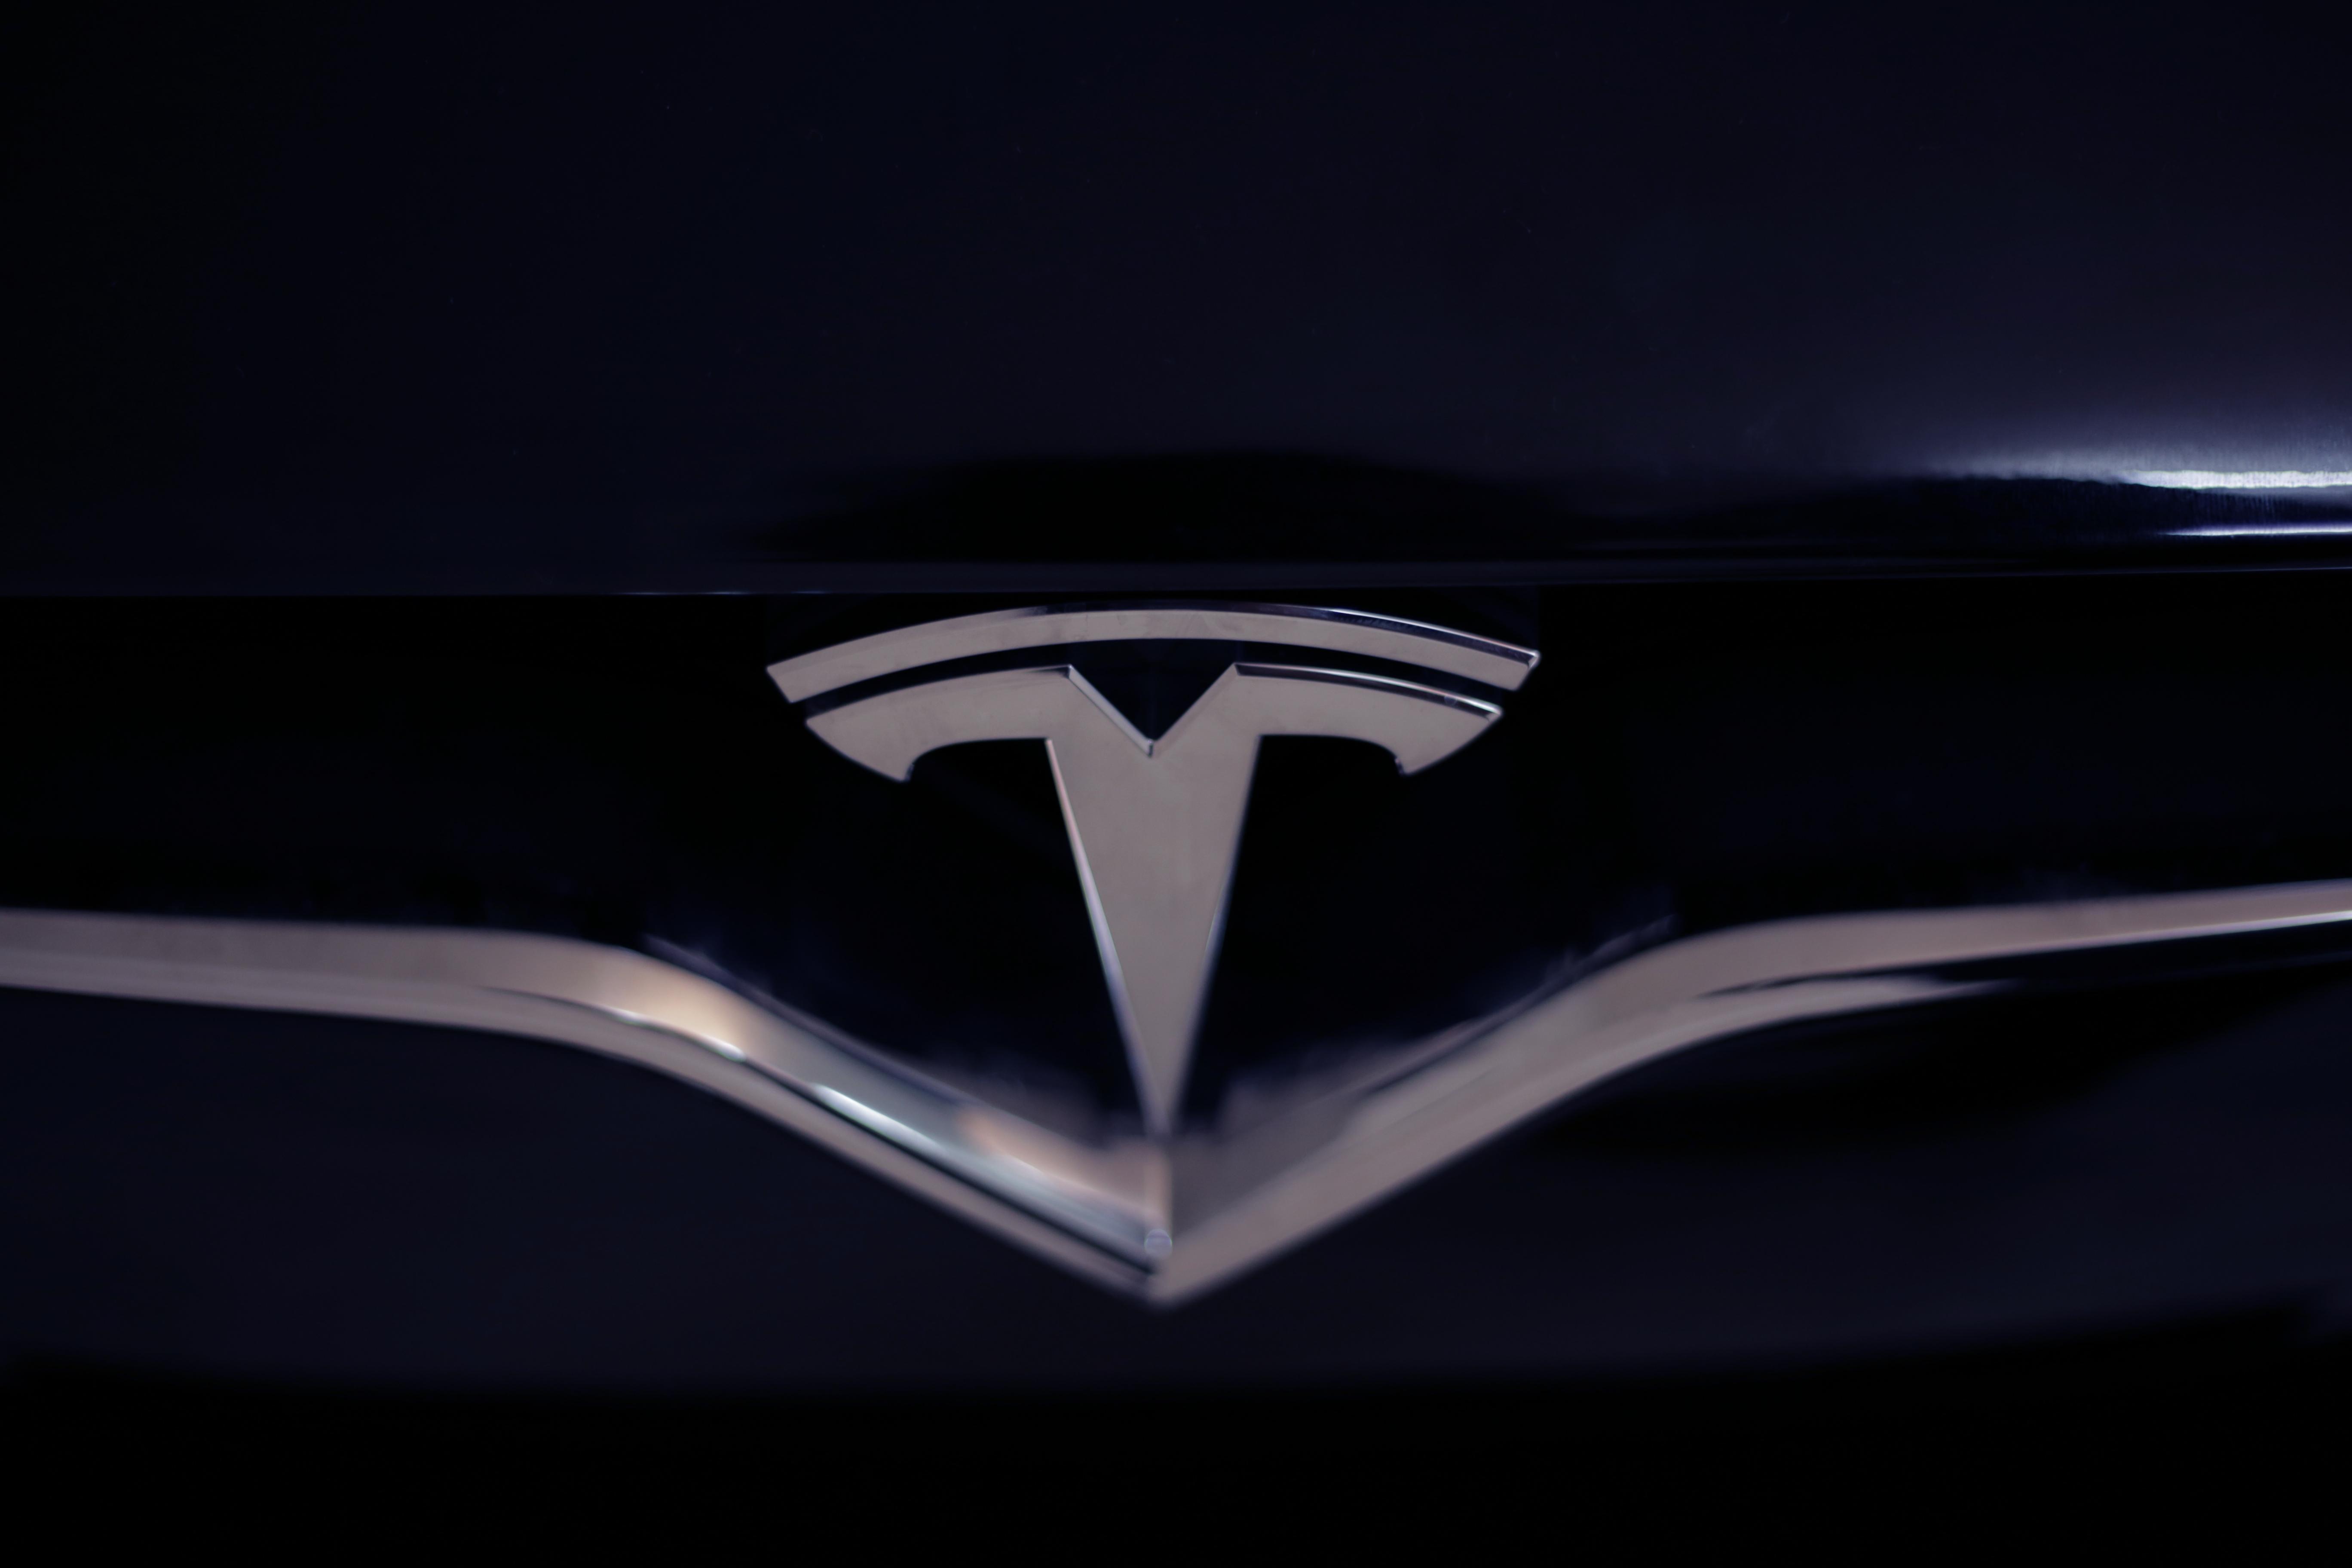 Tesla Picture [HD]. Download Free Image